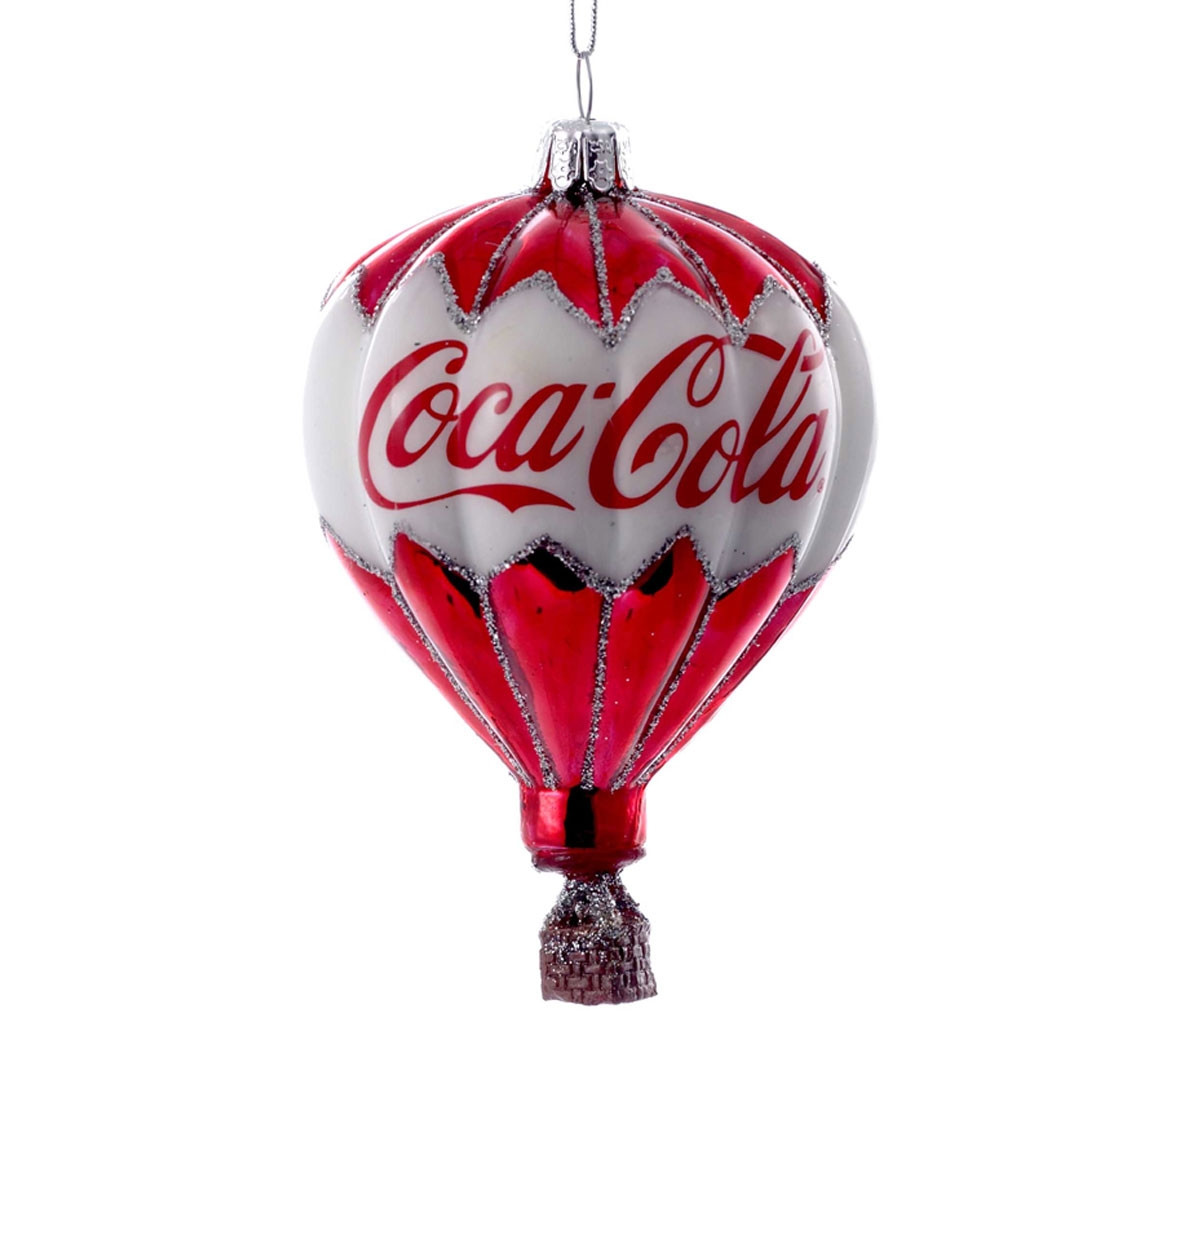 Coca-Cola Balloon Glass Christmas Ornament